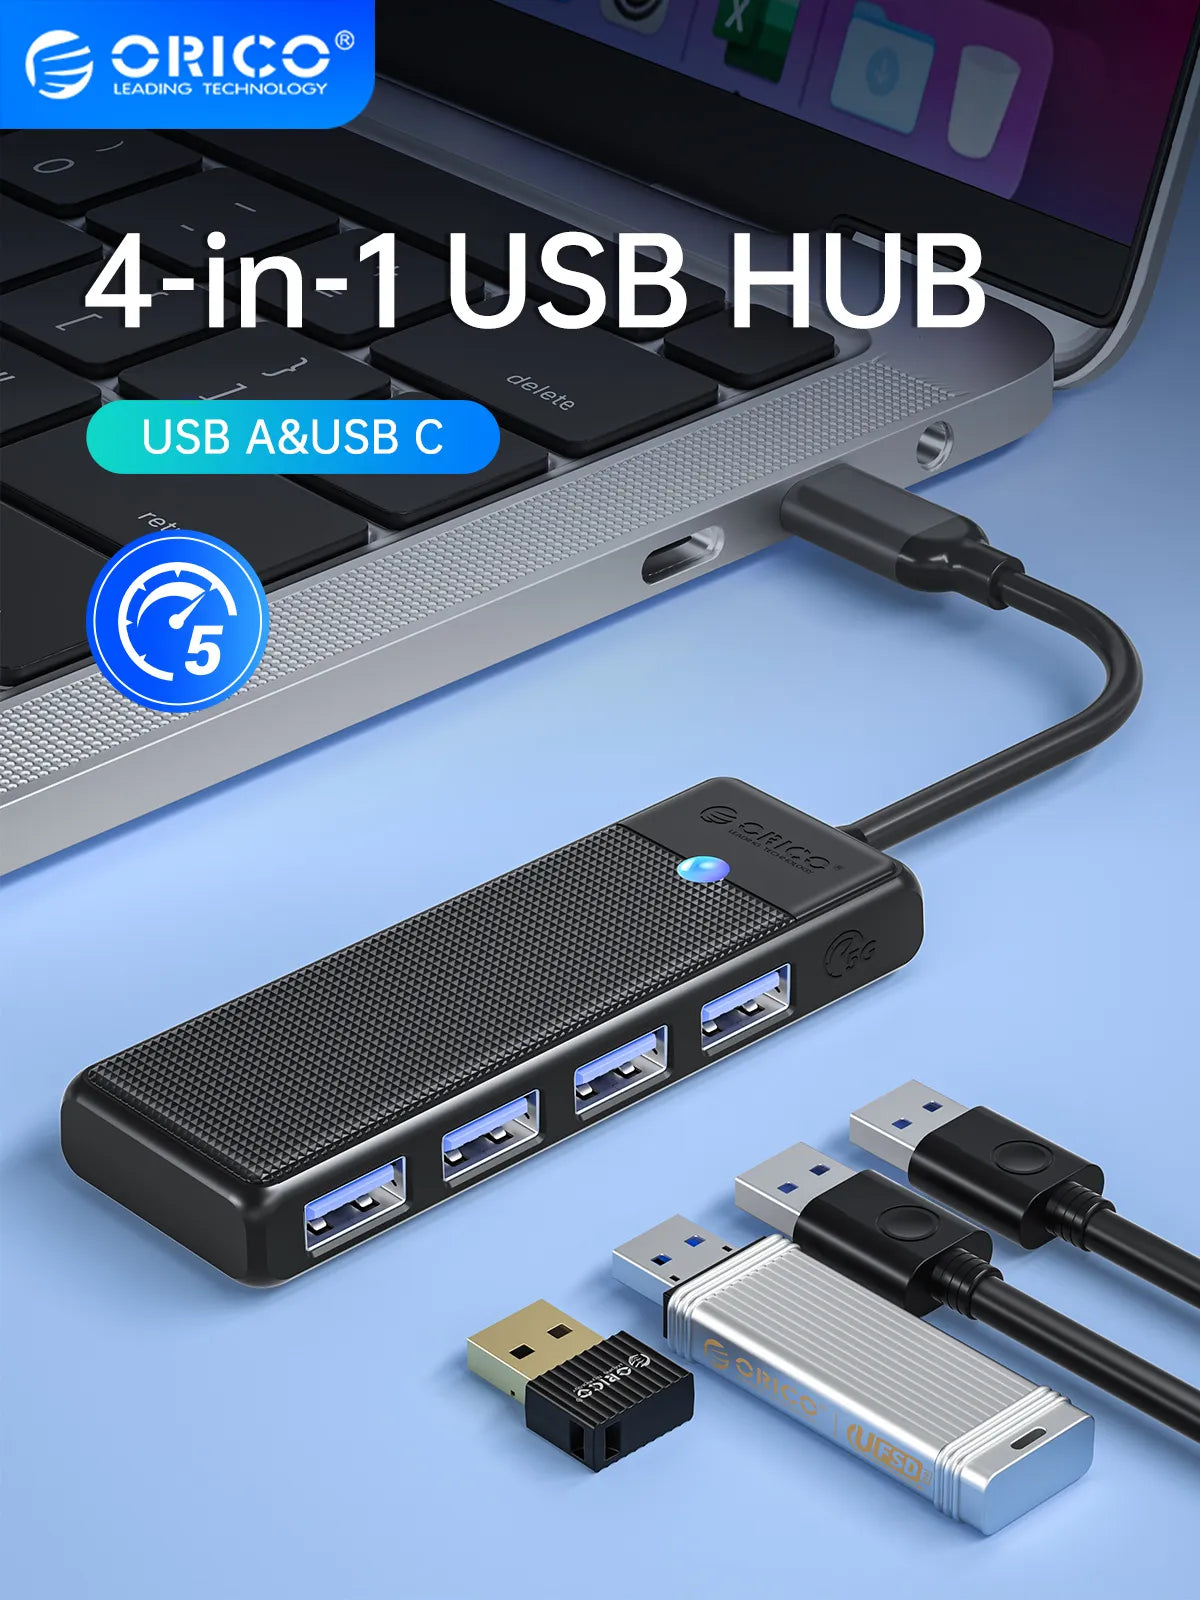 ORICO Type C USB HUB 3.0 4-Port Splitter - Ultra-Slim